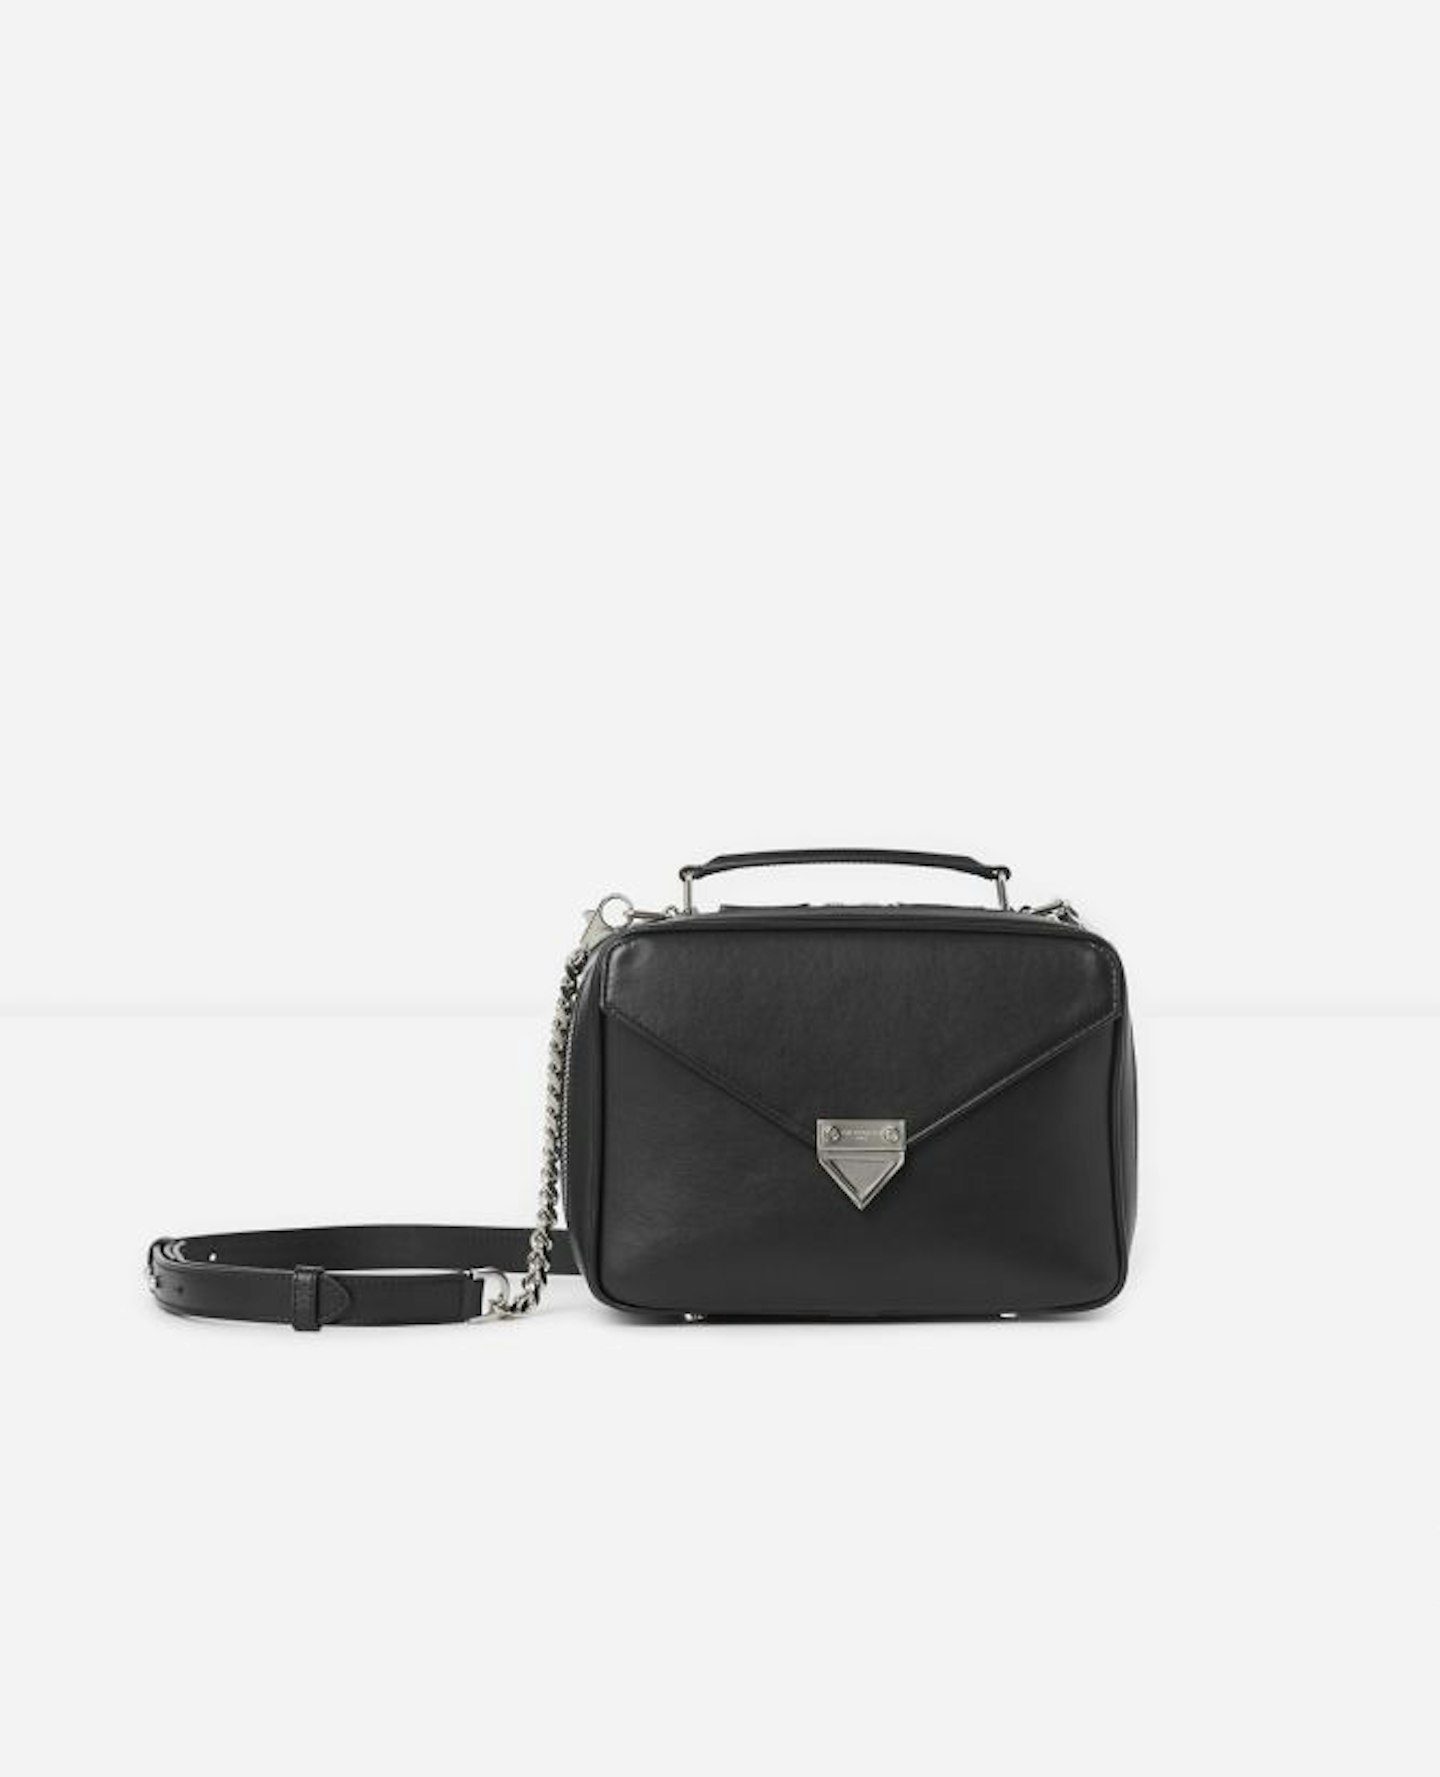 Medium Black Barbara Bag, £348